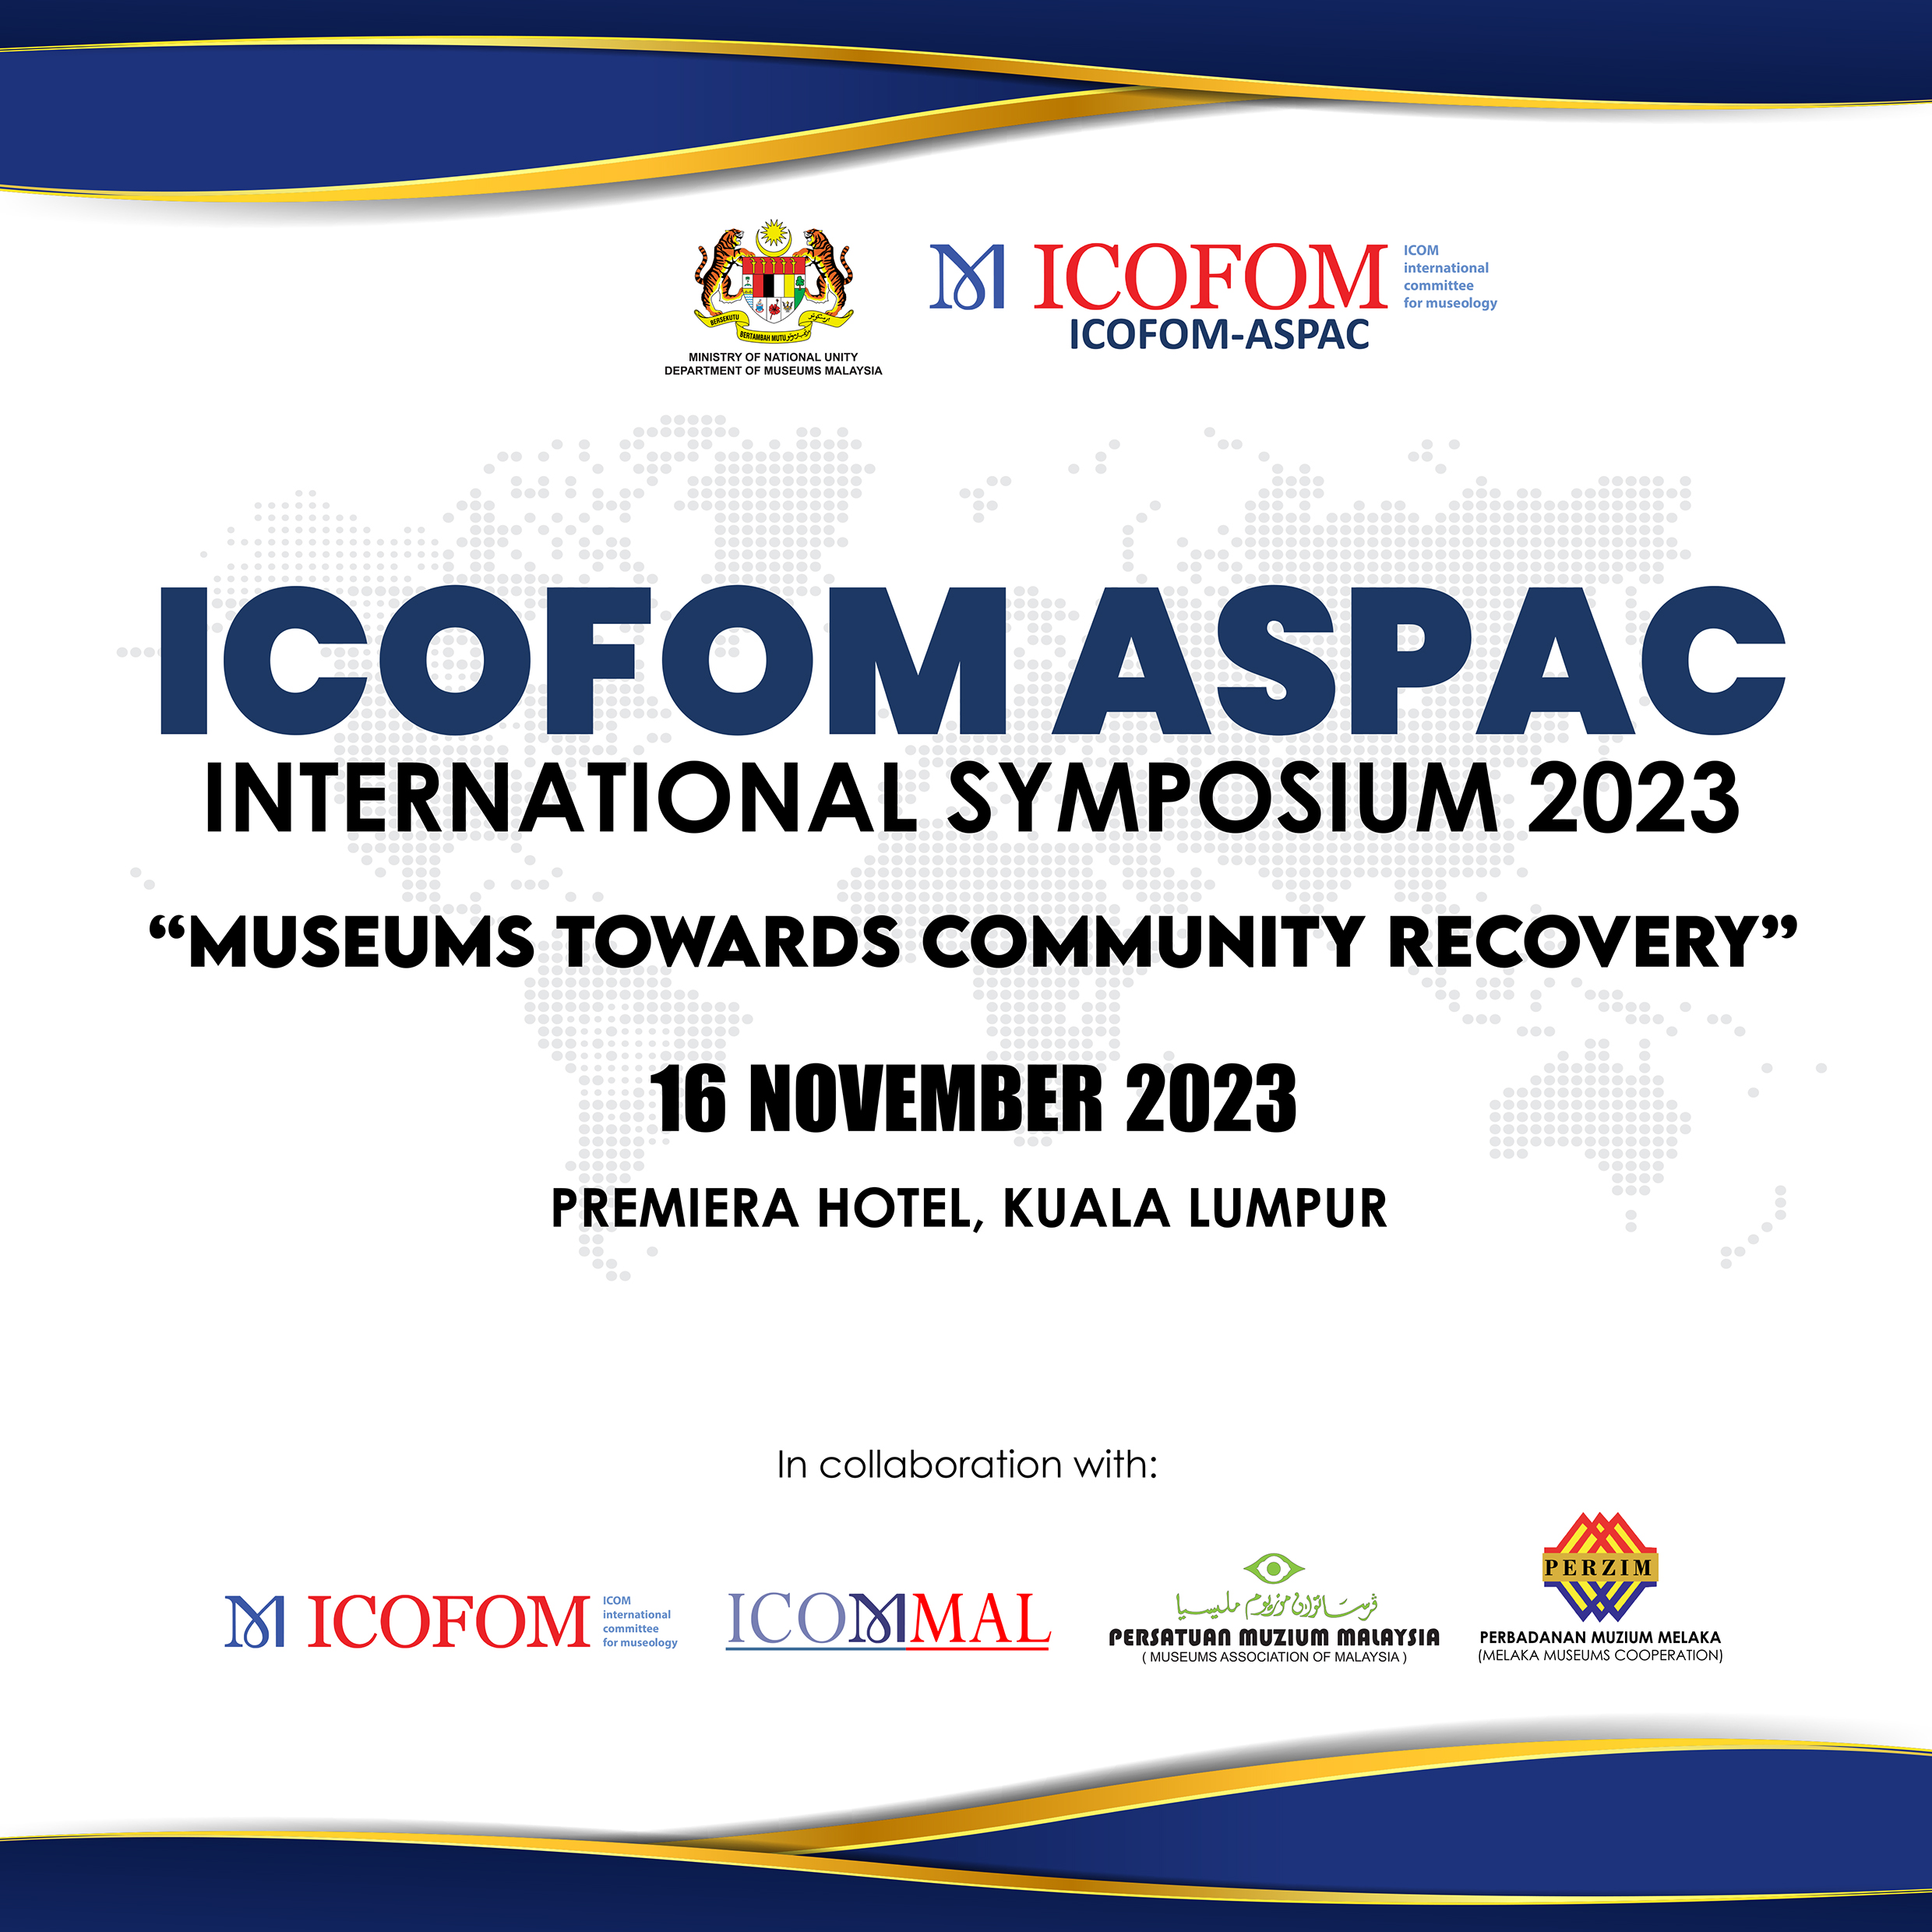 ICOFOM ASPAC INTERNATIONAL SYMPOSIUM 2023